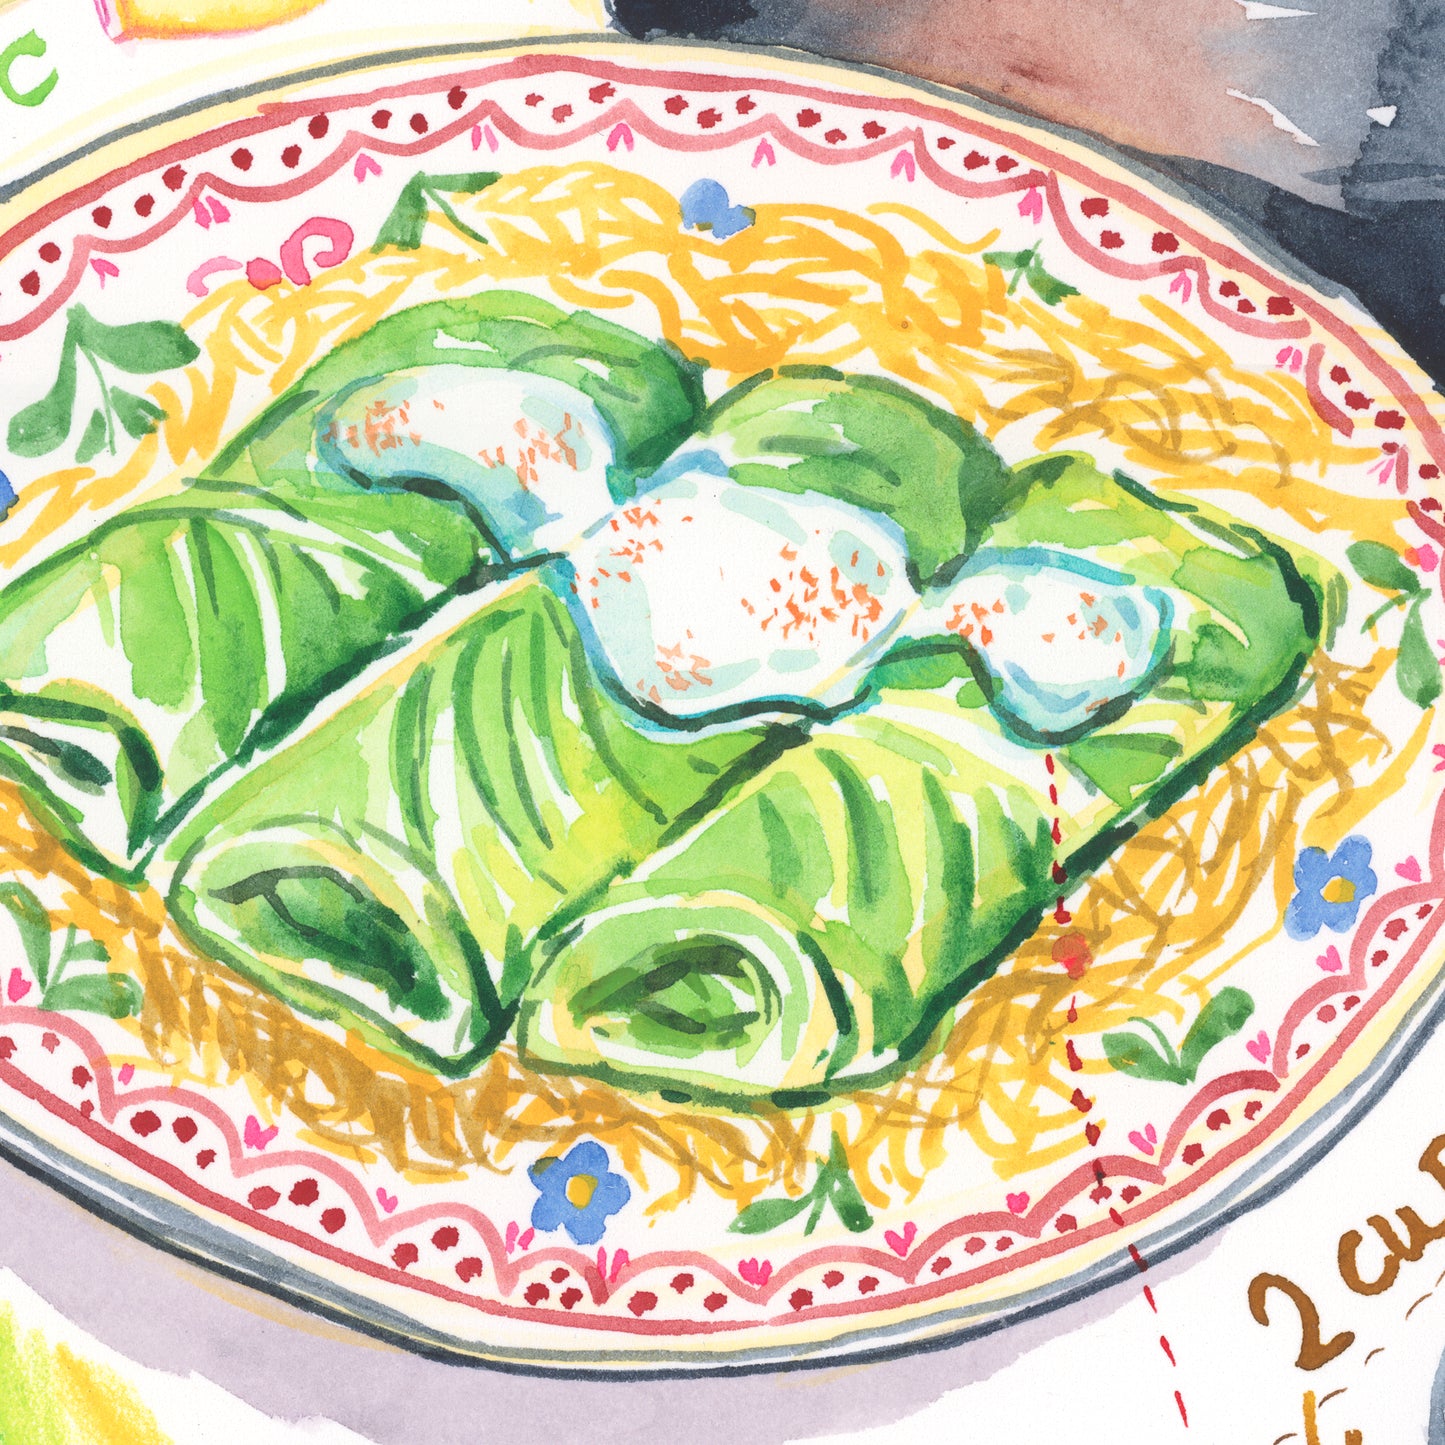 Hungarian Stuffed Cabbage Leaves recipe. Original watercolor painting